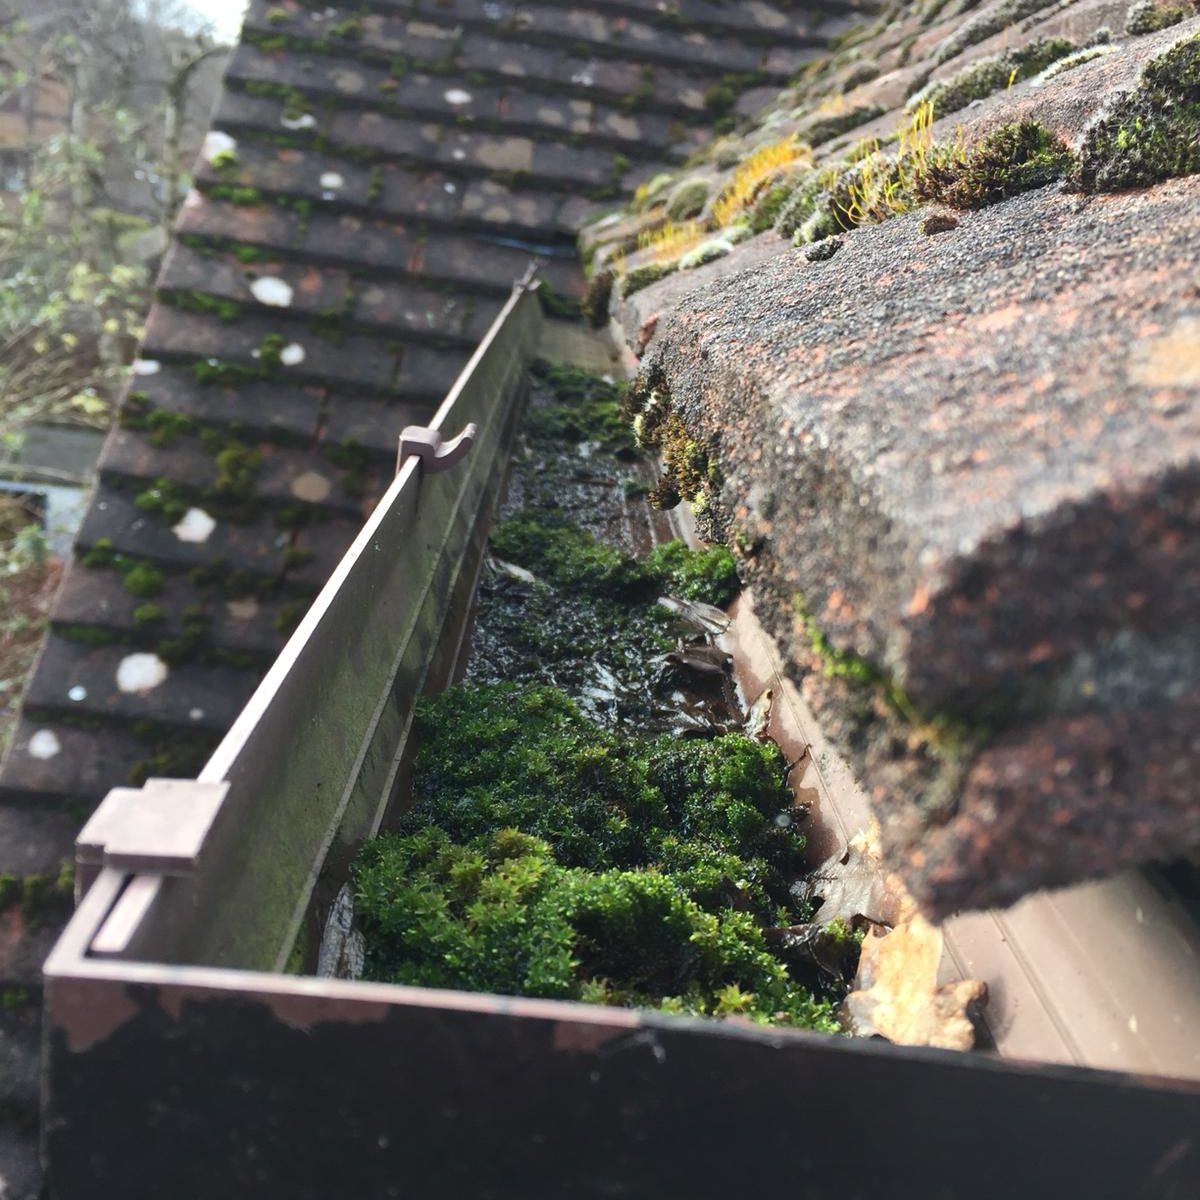 House gutters full of moss